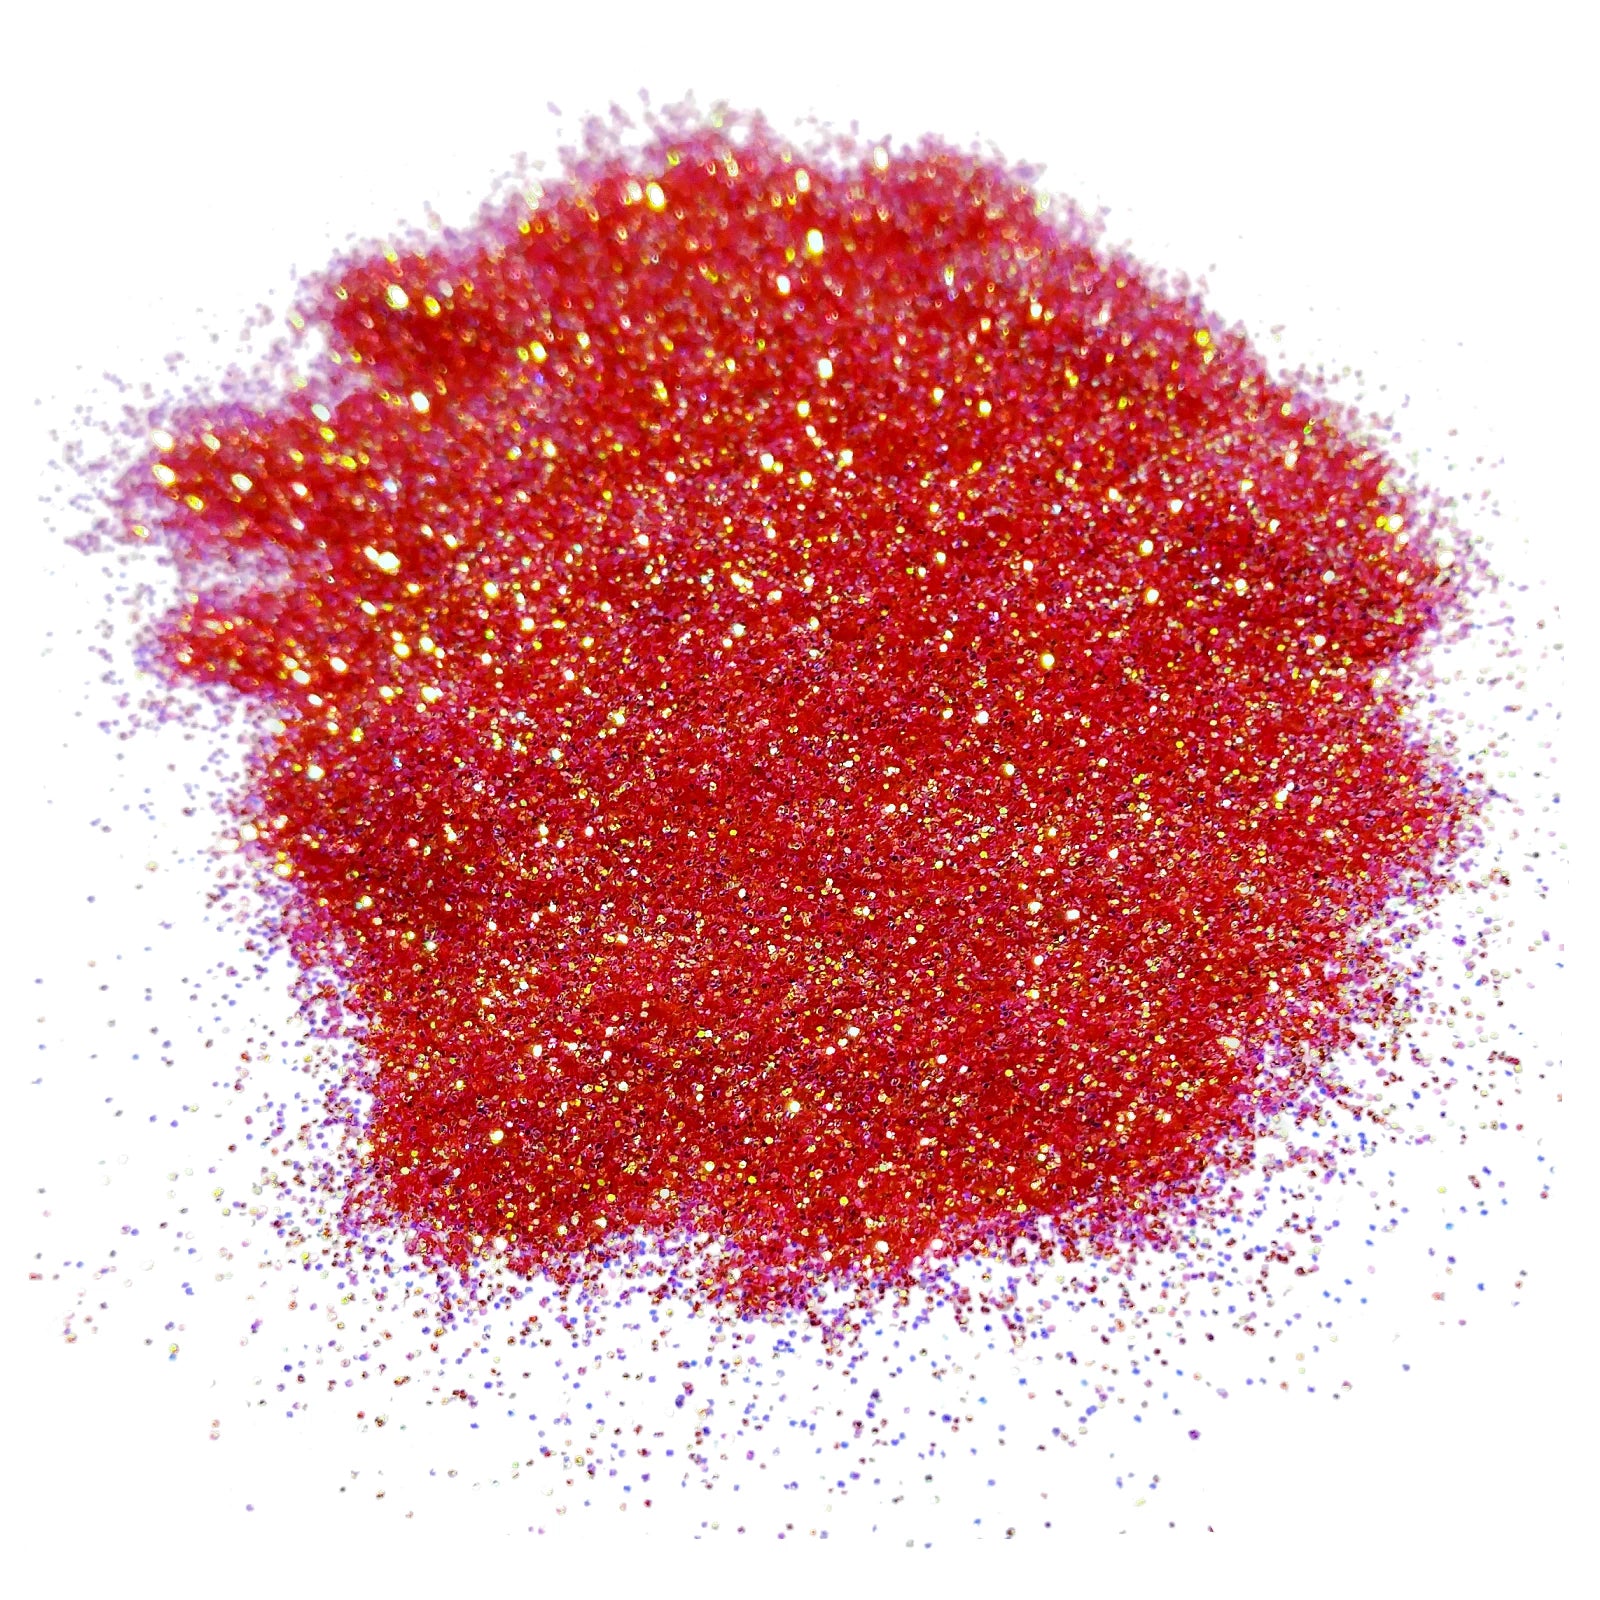 Red Fine Color Shifting Glitter - Mad About Saffron By Crazoulis Glitter